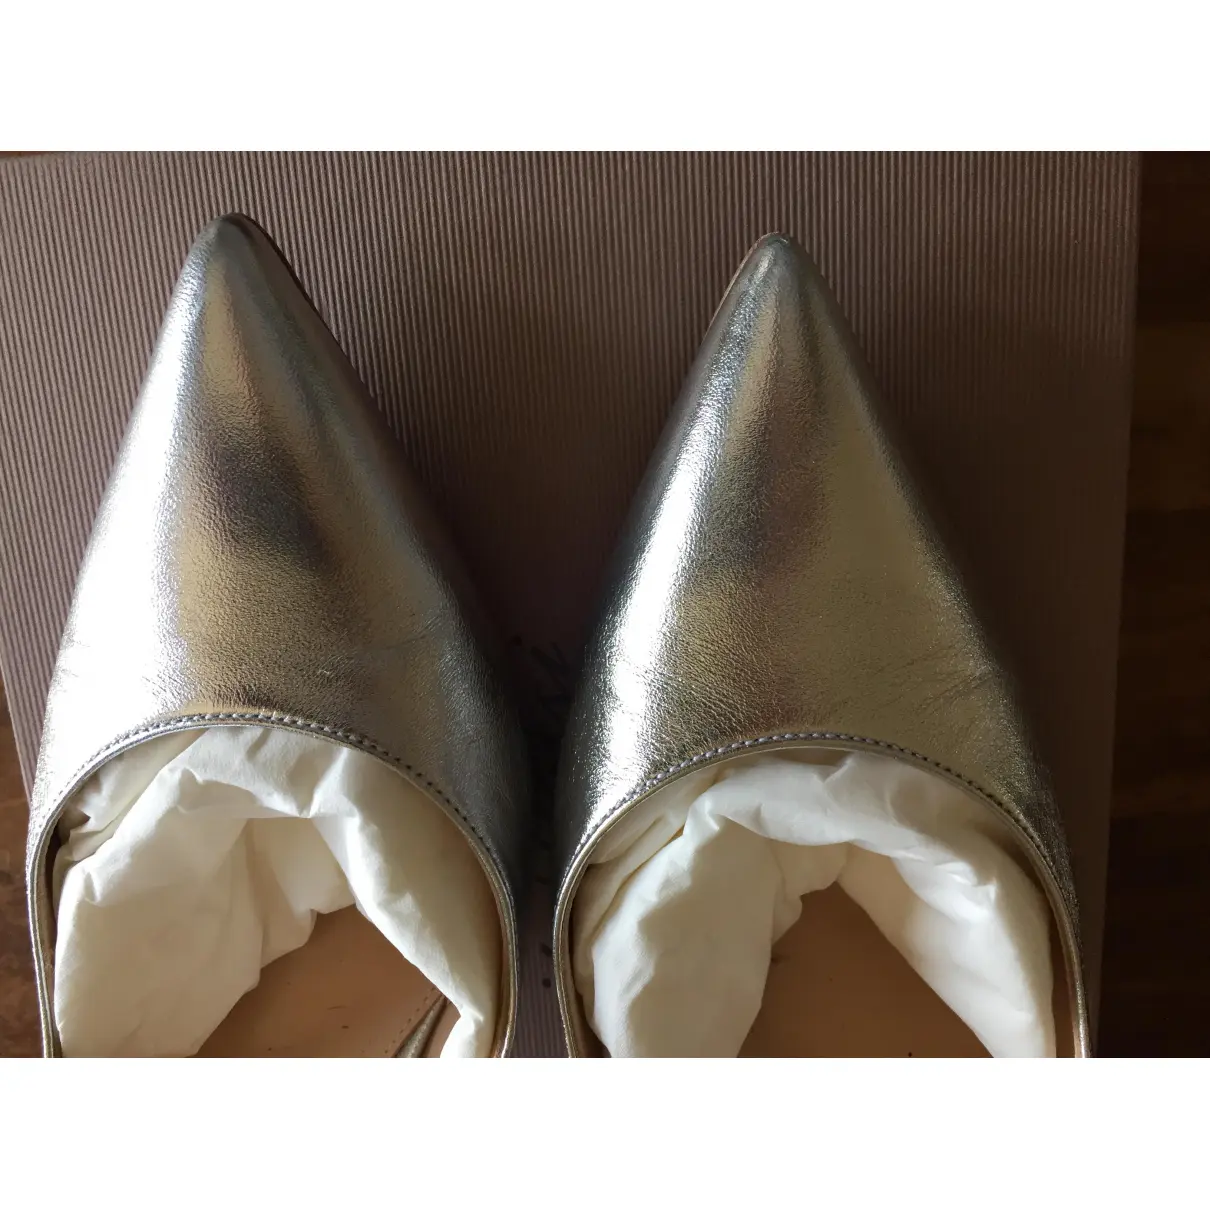 Leather heels Gianvito Rossi